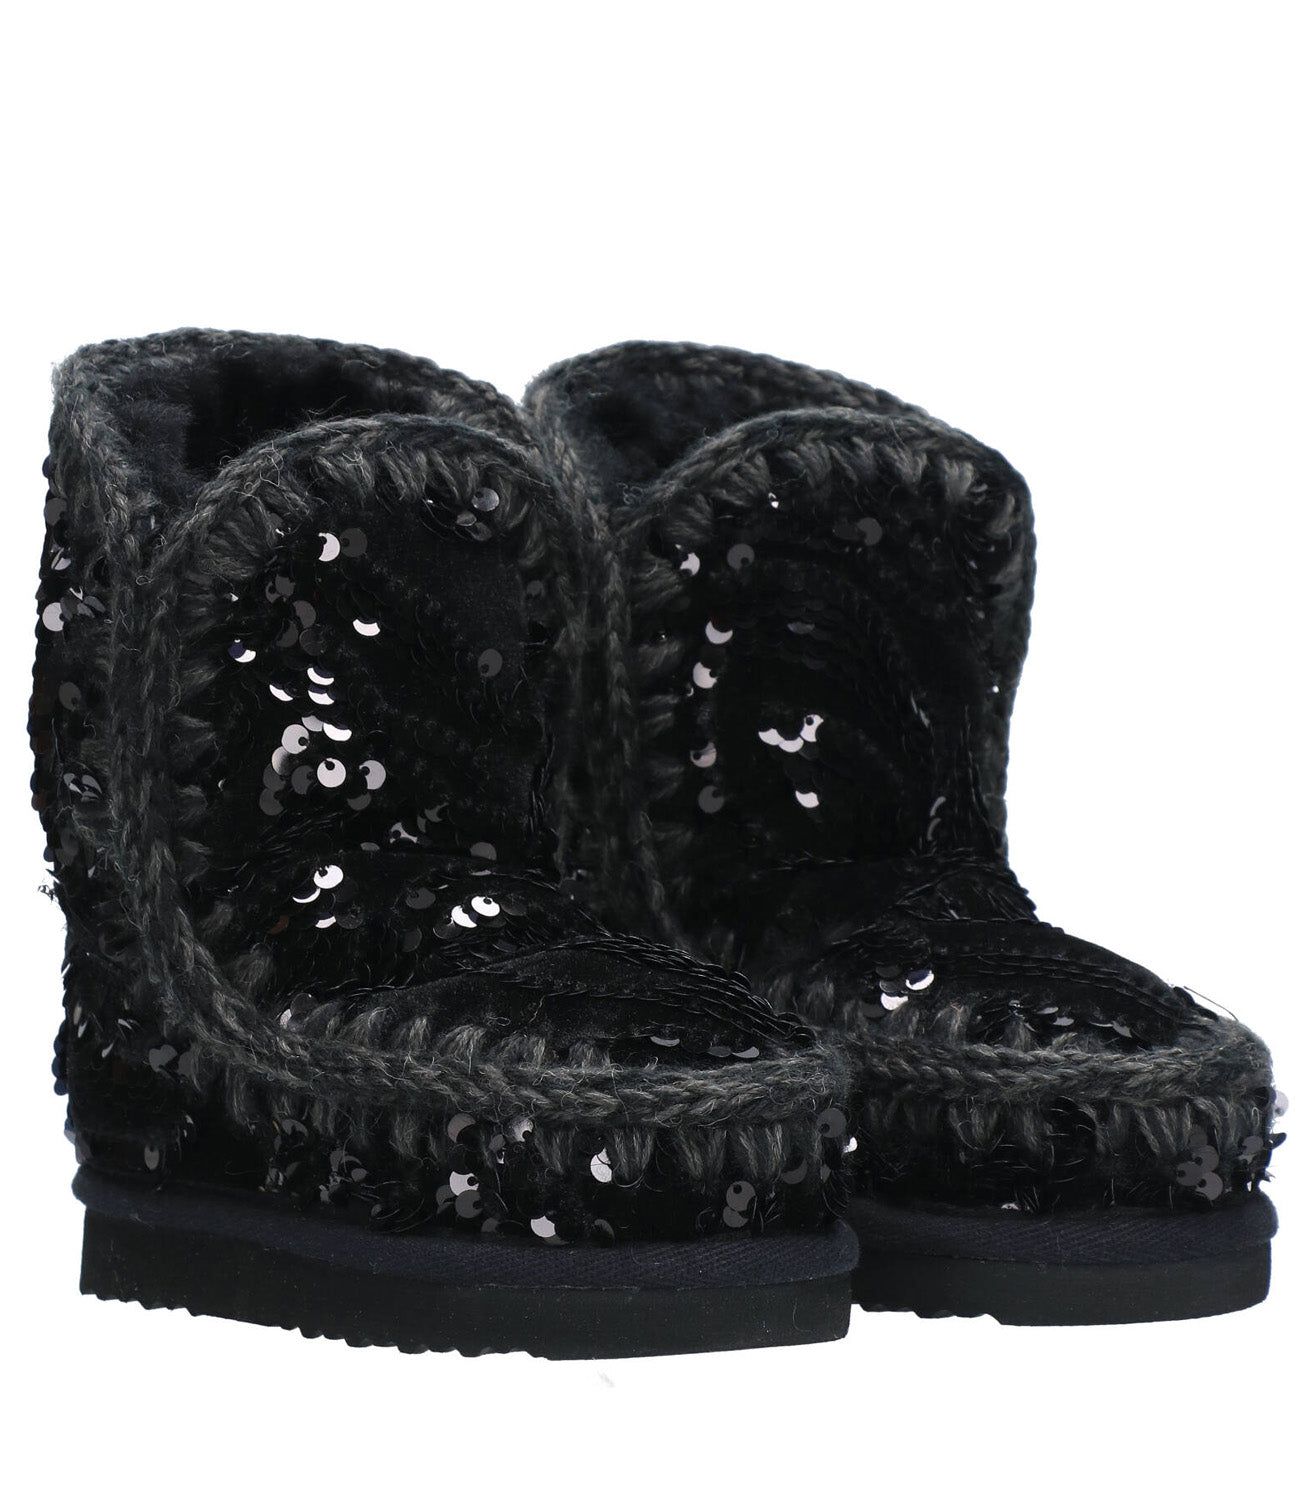 Mou Kids | Eskimo Kid Glamour Sequins Black Ankle Boots